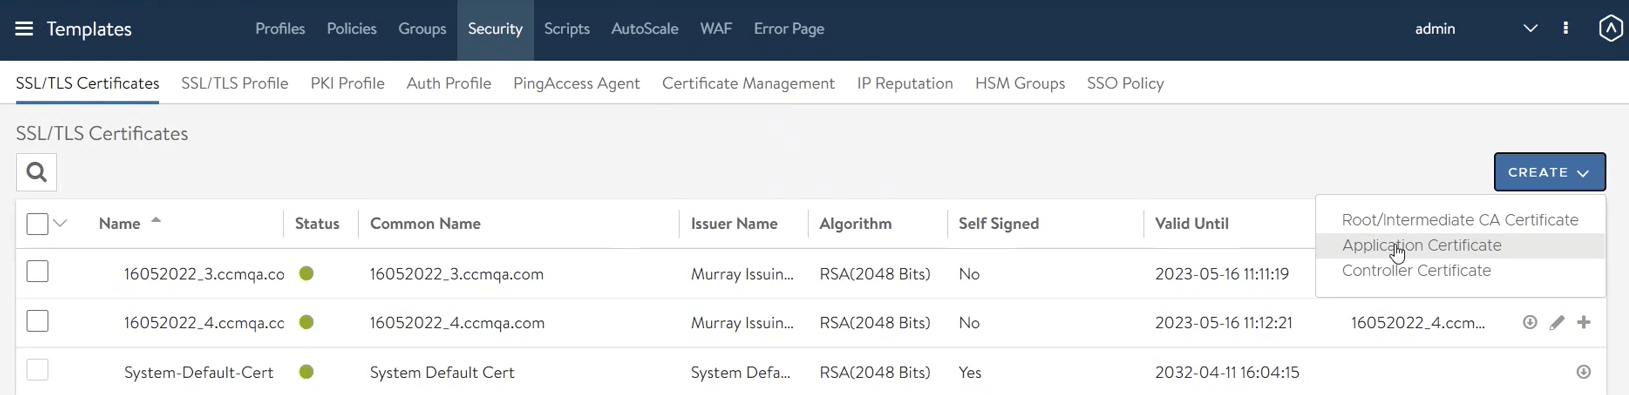 SSL/TLS Certificates Page